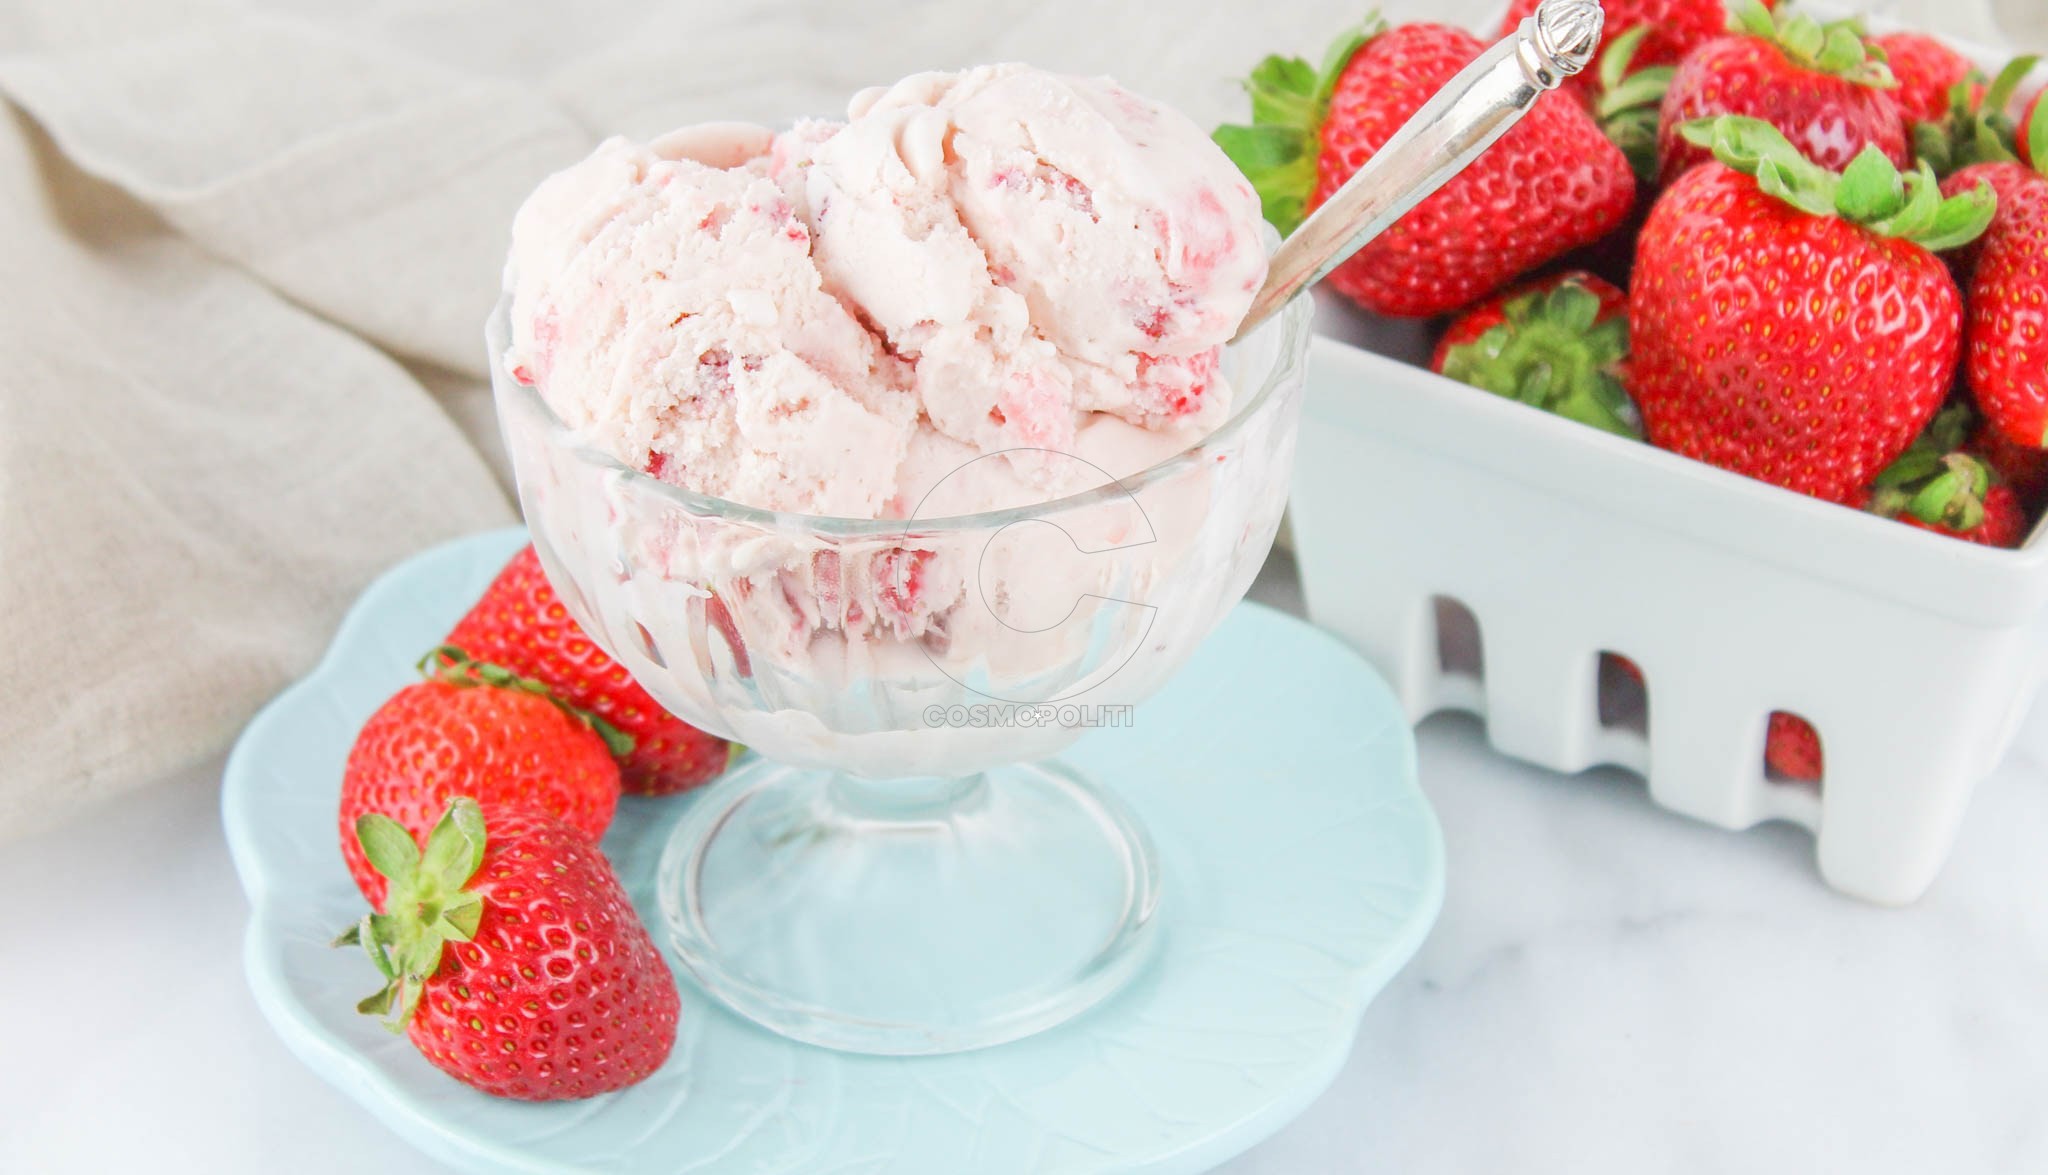 Strawberry-Ice-Cream-PasadenaDaisy.com-4